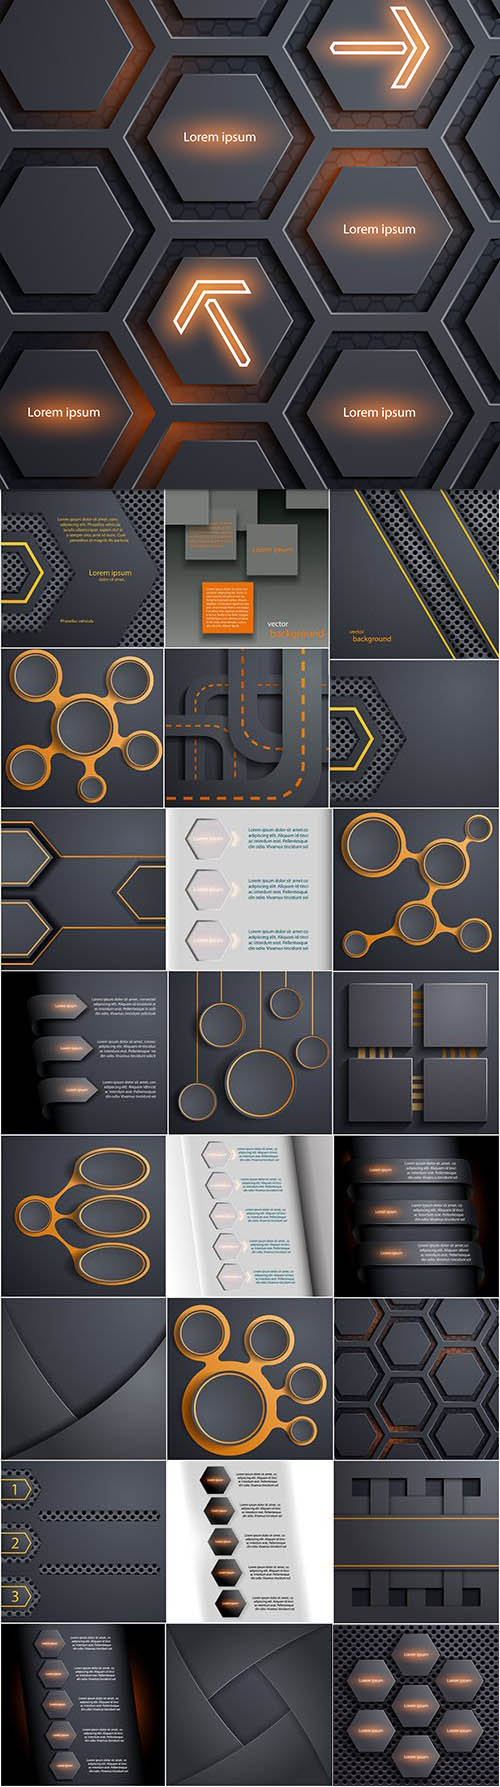 Elements Design of Infographics